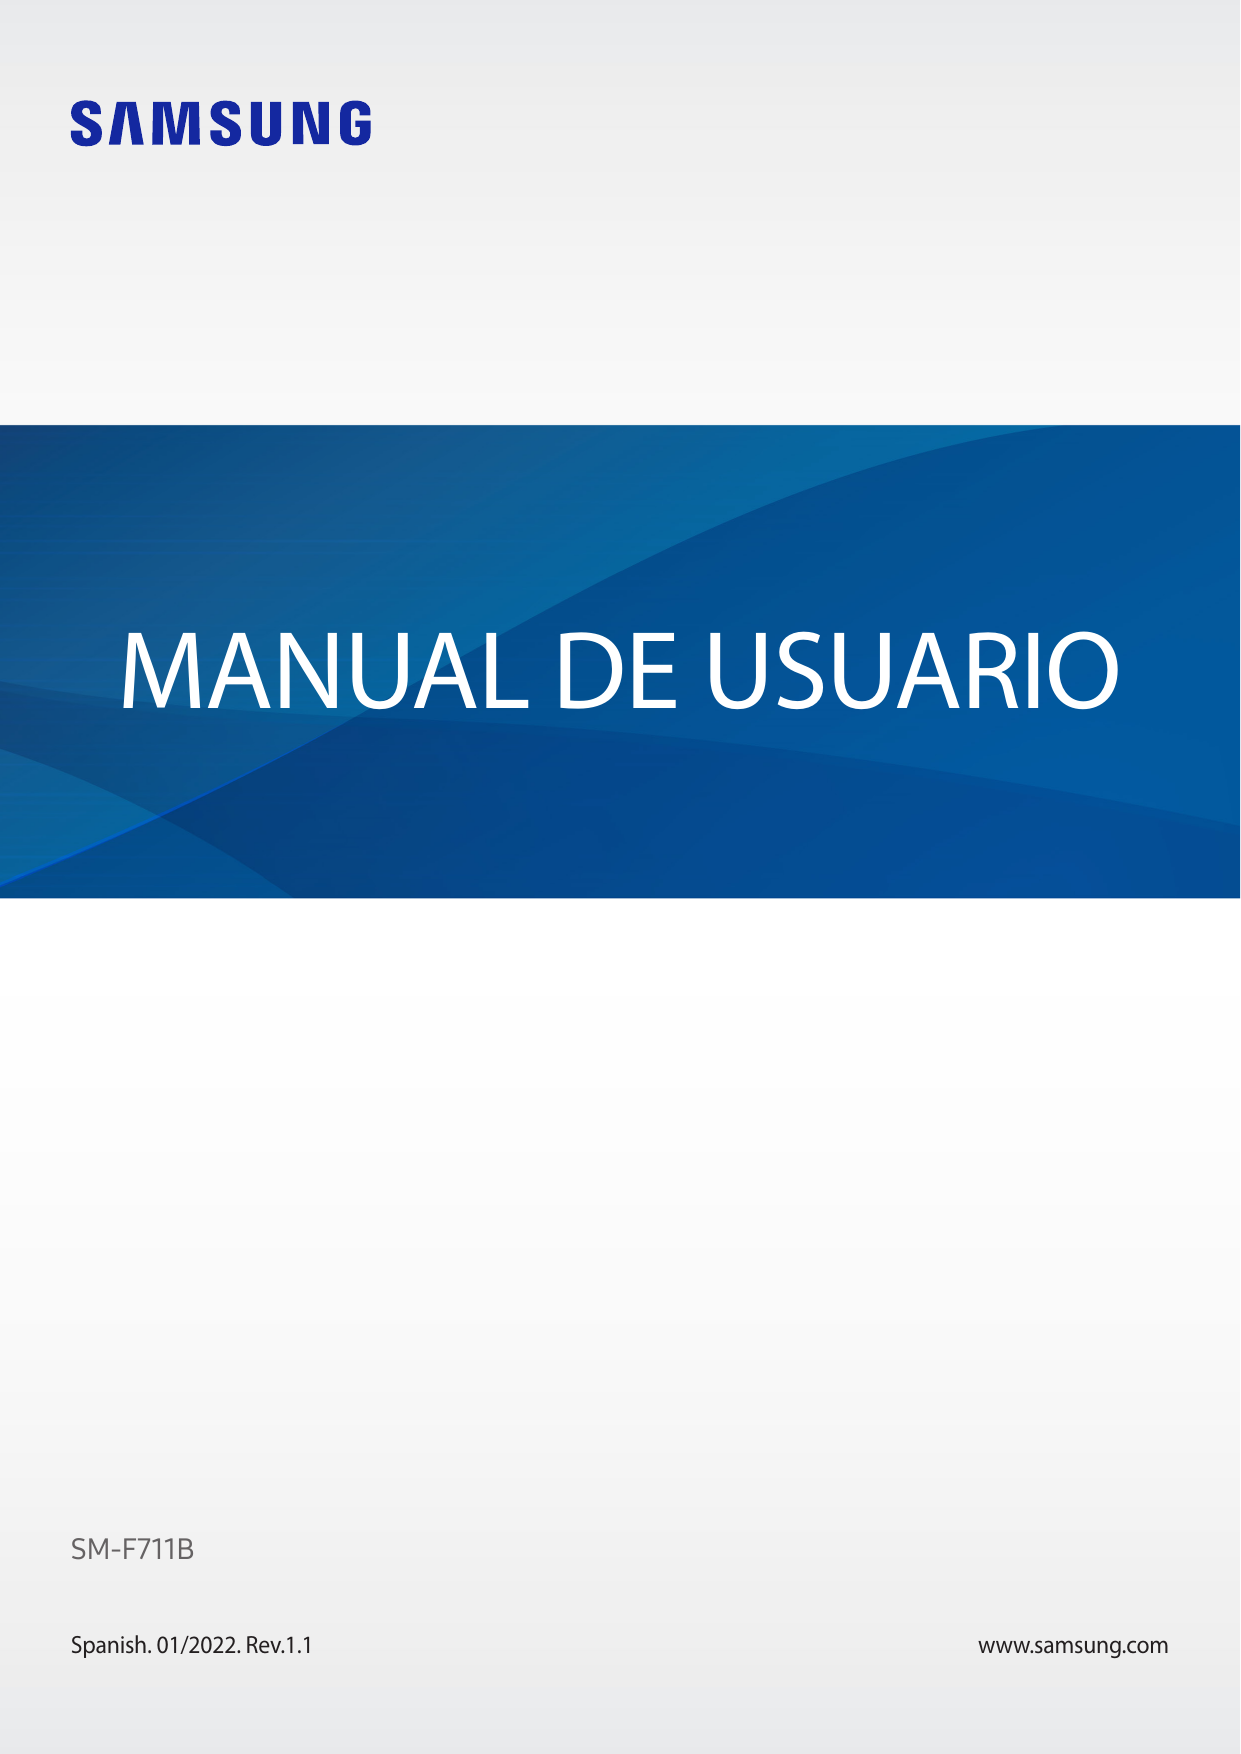 MANUAL DE USUARIOSM-F711BSpanish. 01/2022. Rev.1.1www.samsung.com